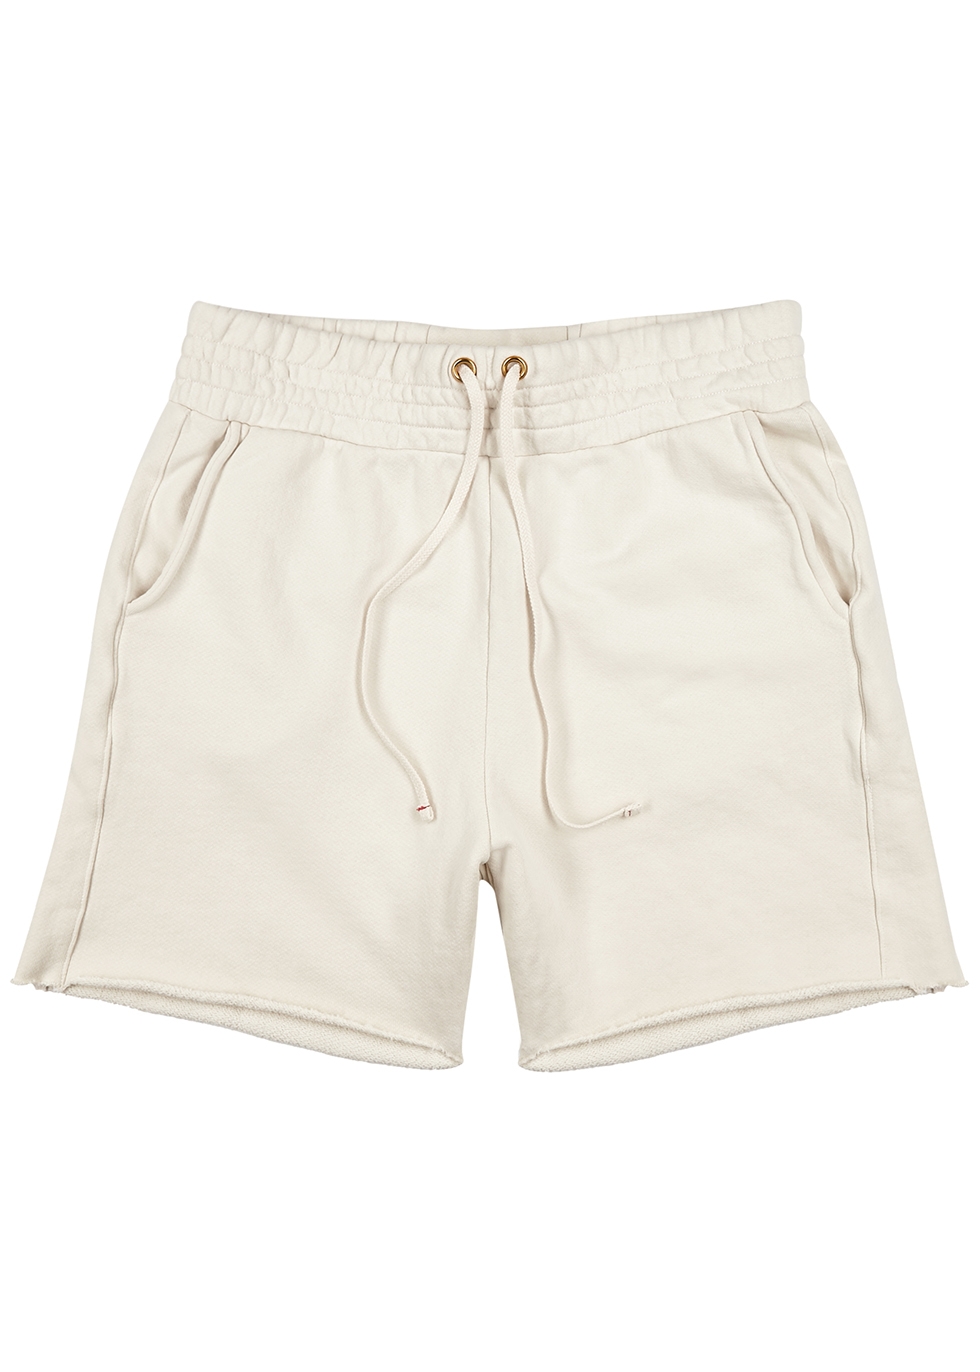 Yacht ecru cotton shorts